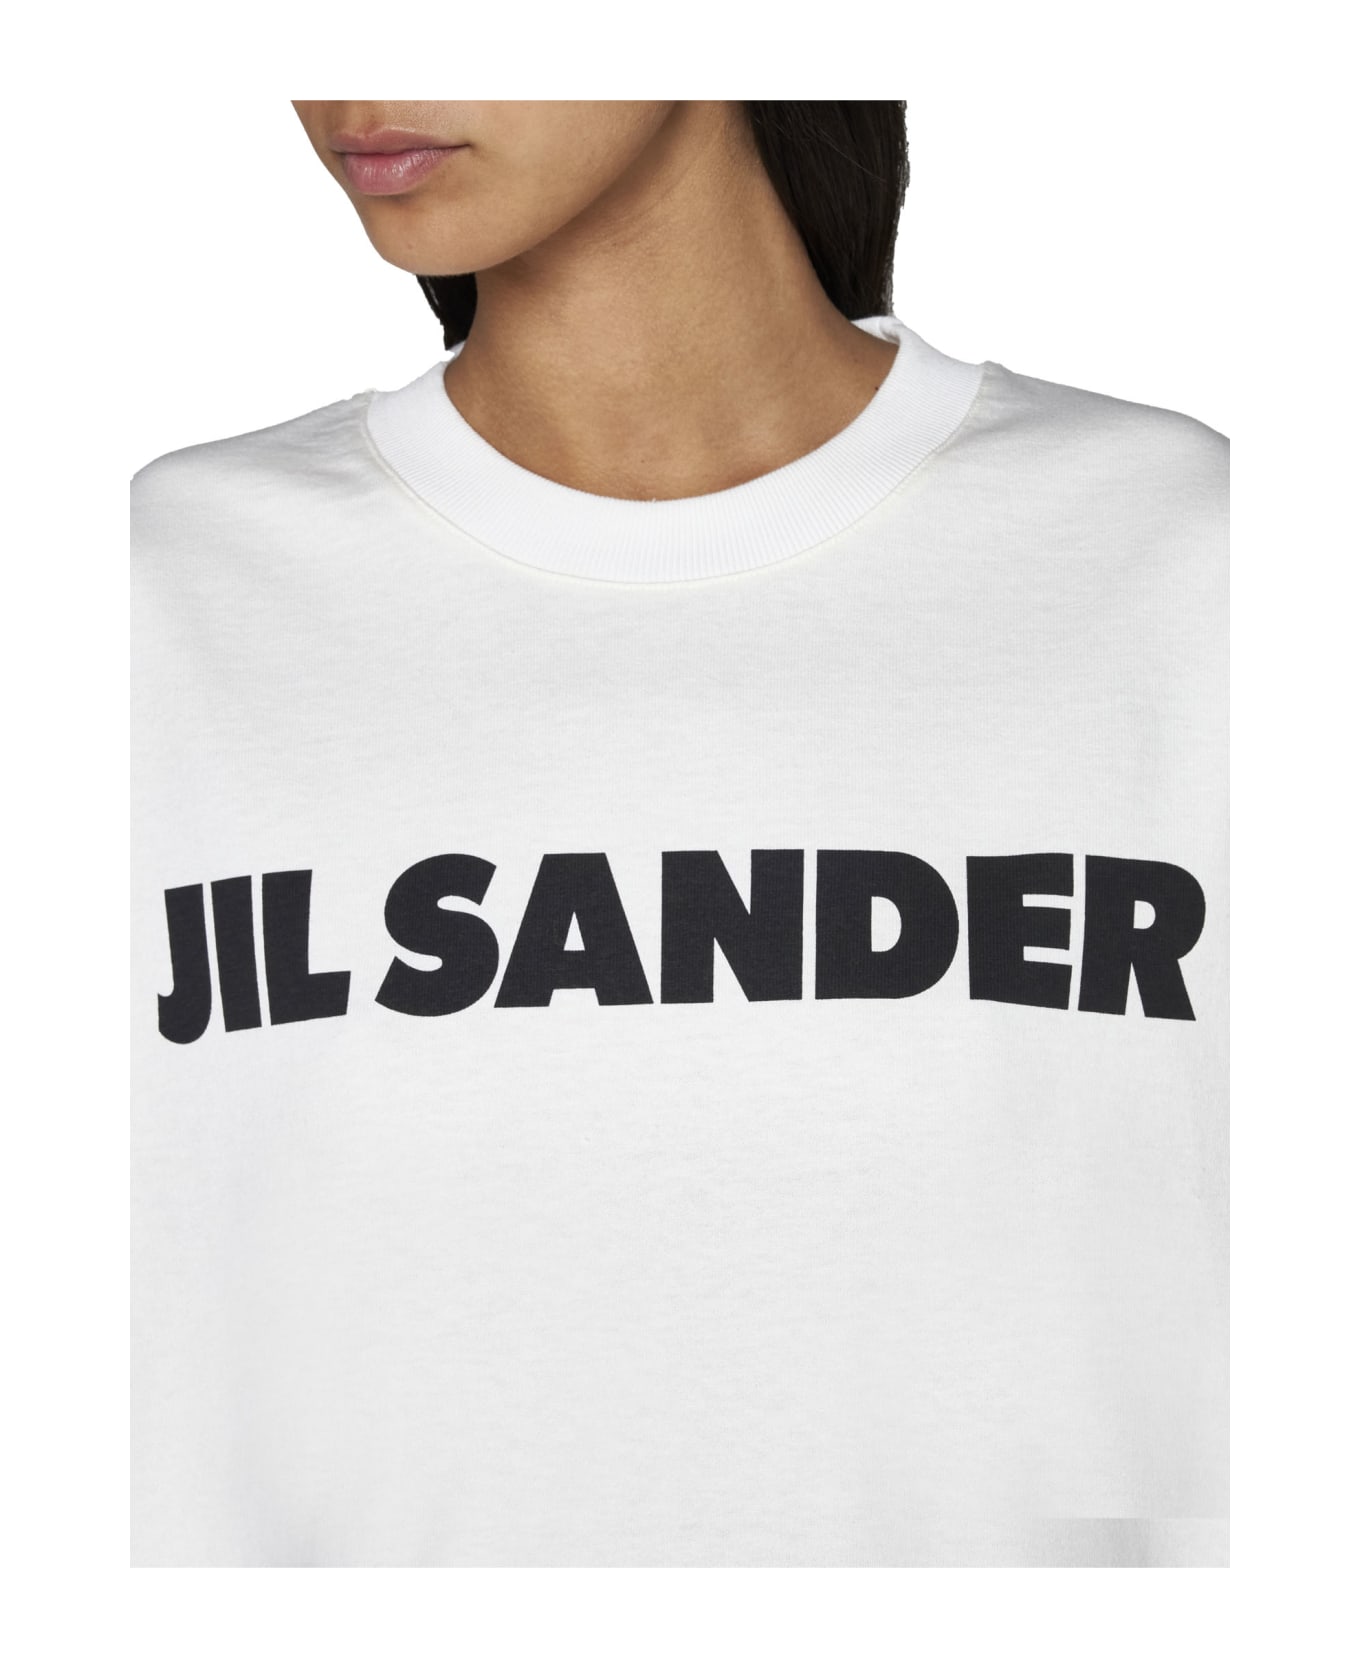 Jil Sander T-Shirt - Porcelain Tシャツ